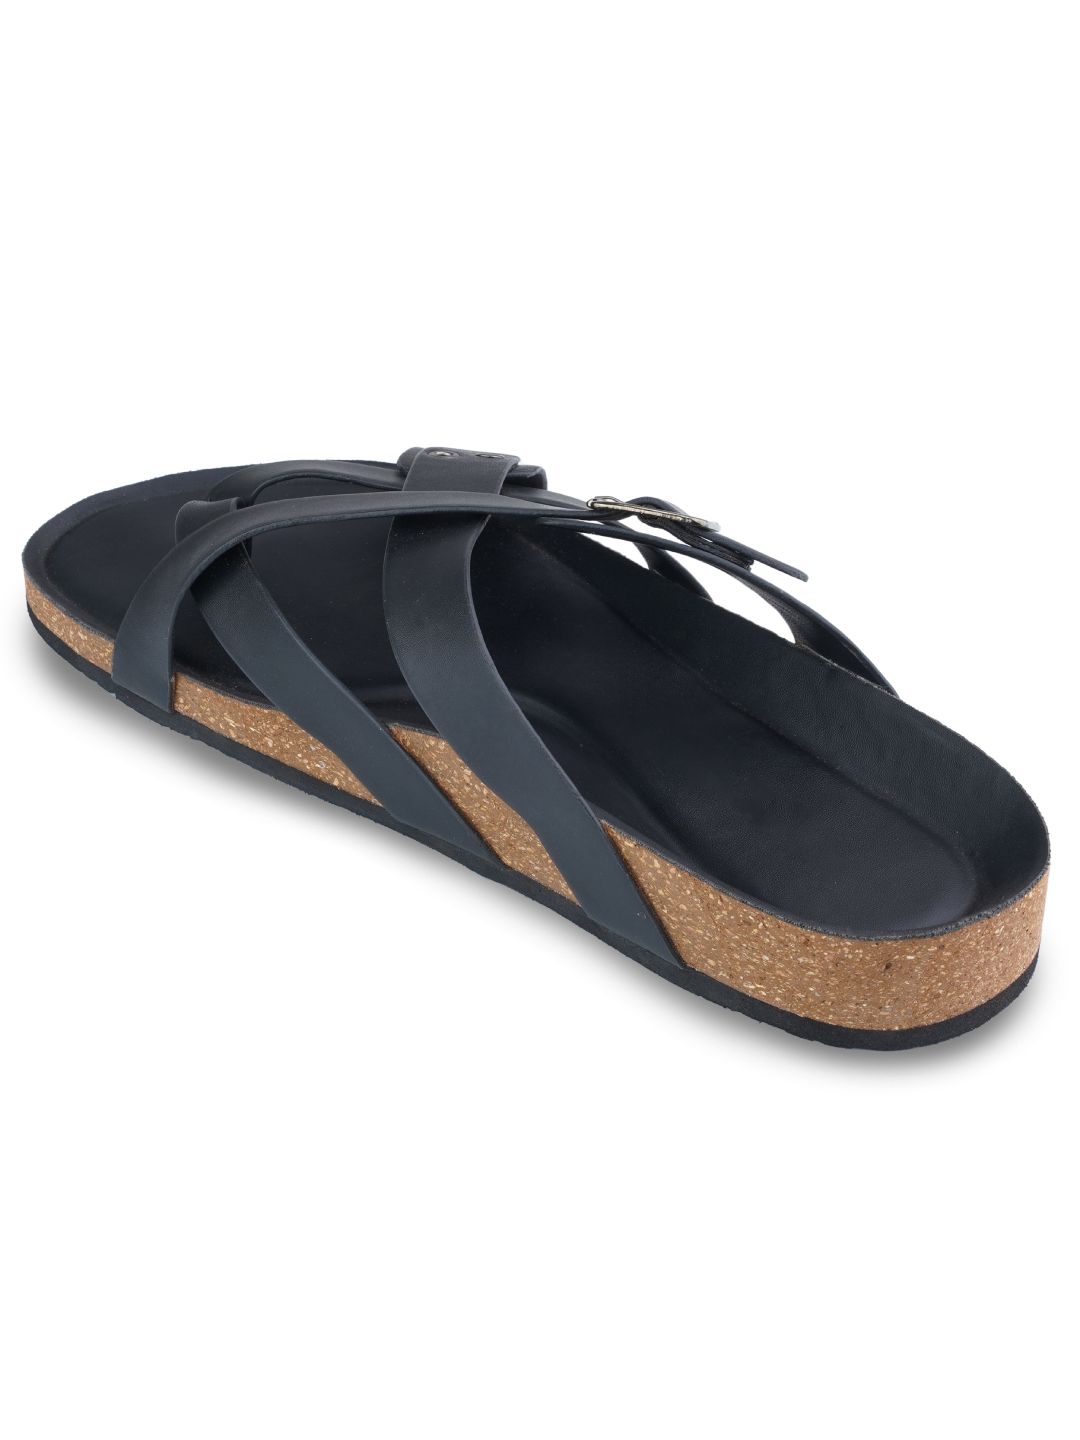 Slip On Sandals Men's - Leather Sandals | Pagonis Greek Sandals